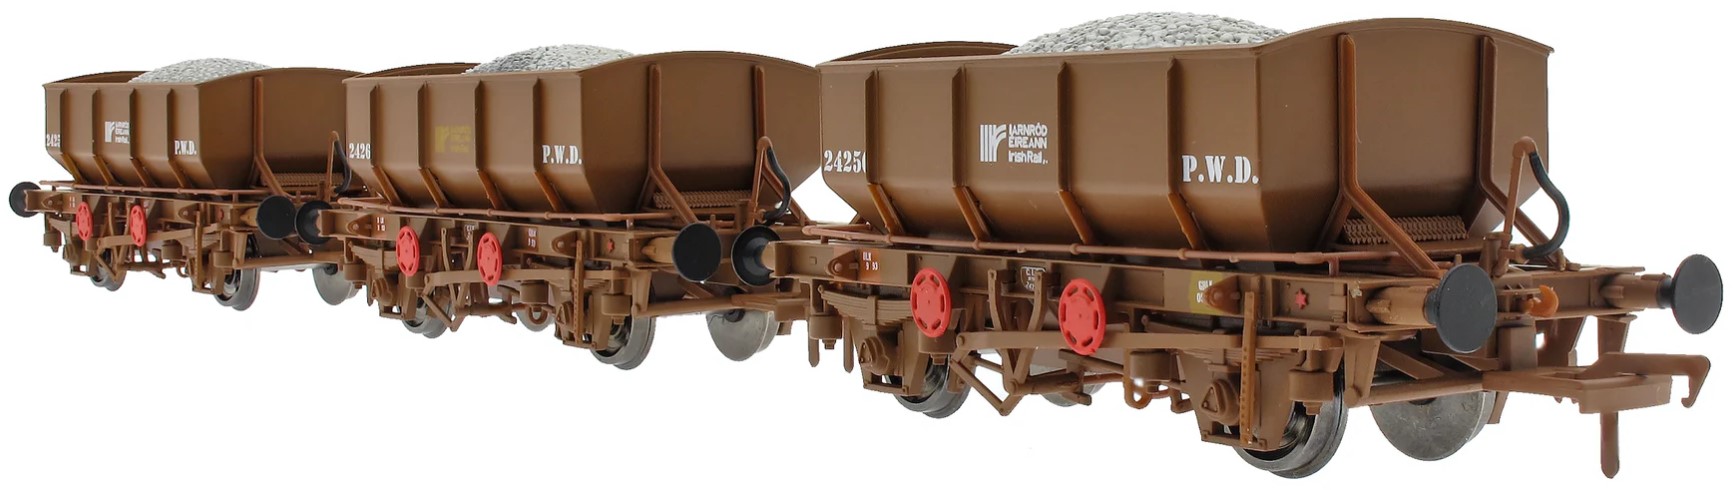 Irish Railway Models OO Gauge (1:76 Scale) 4-wheel ballast hopper CIE